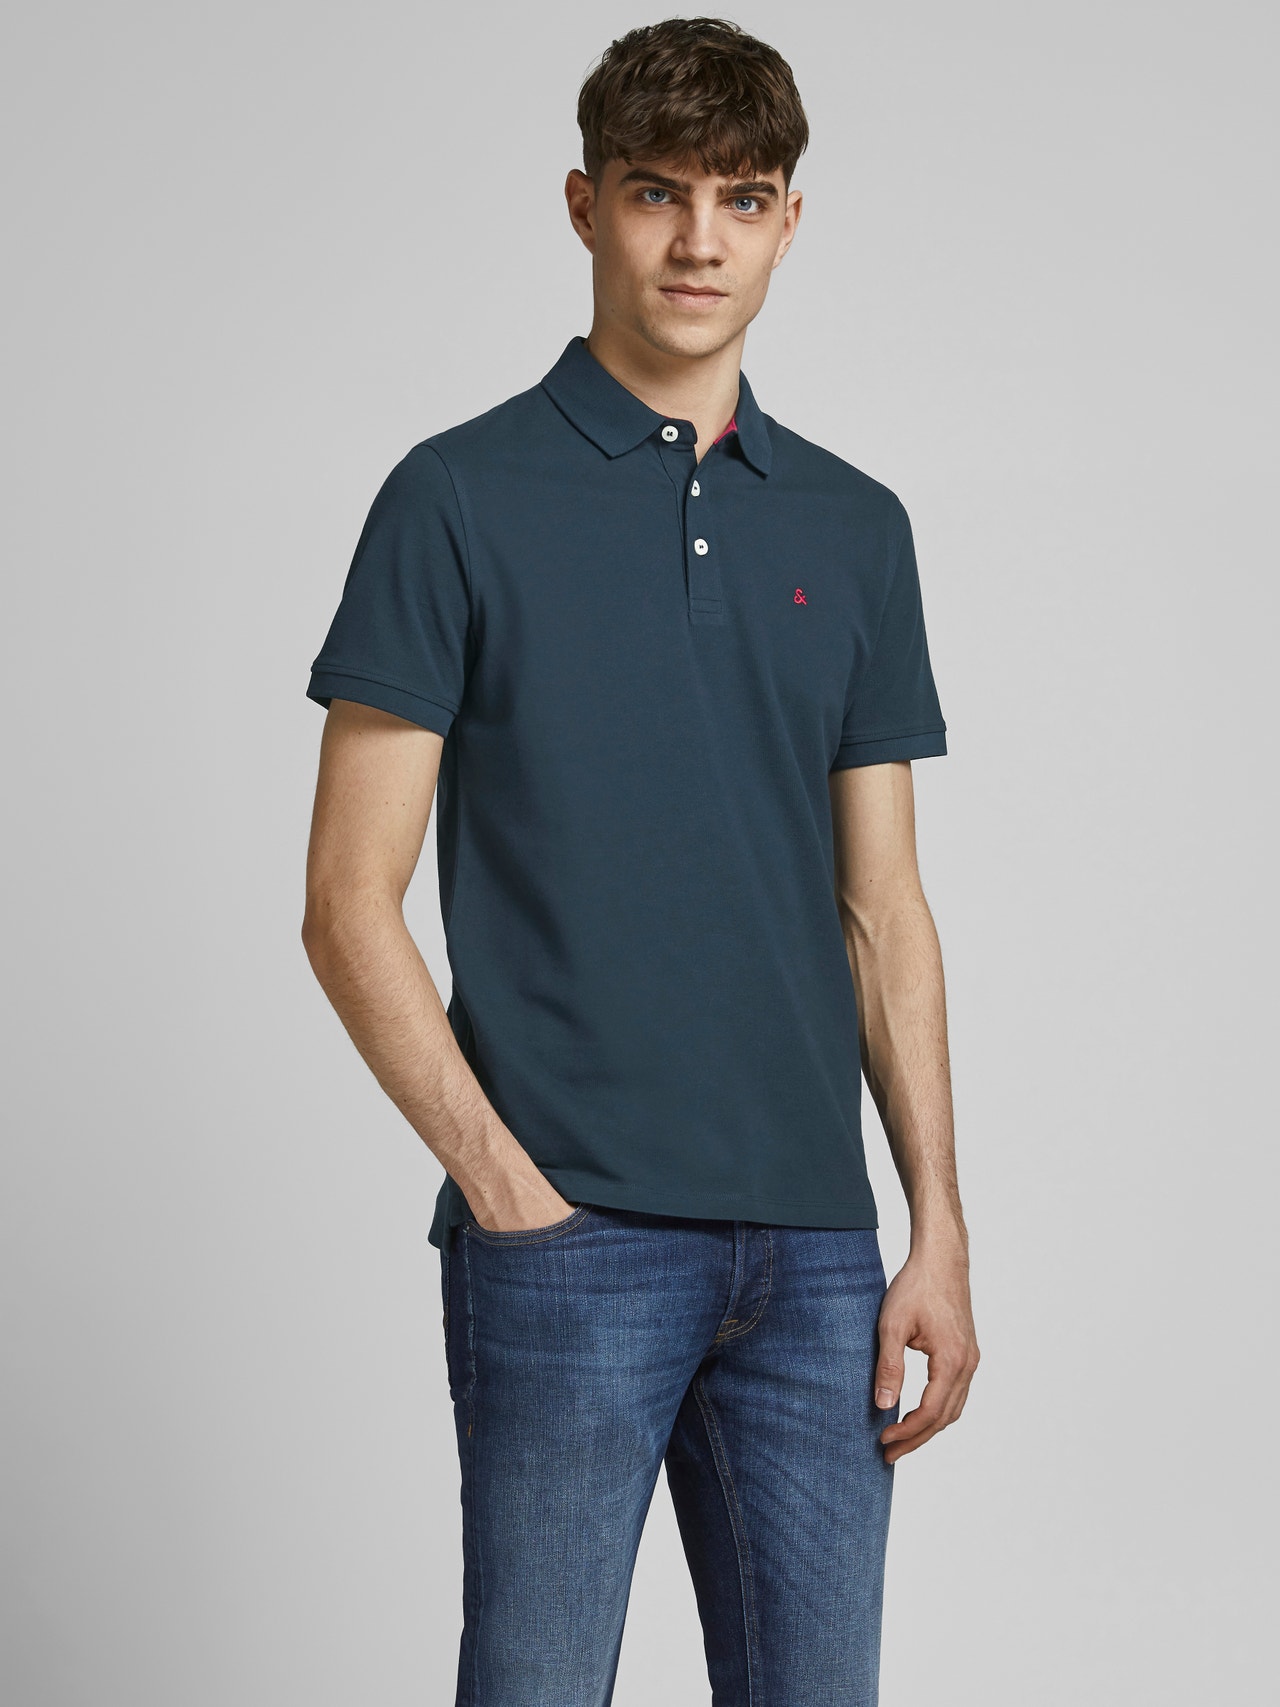 Jack & Jones Plain Polo T-shirt -Navy Blazer - 12136668